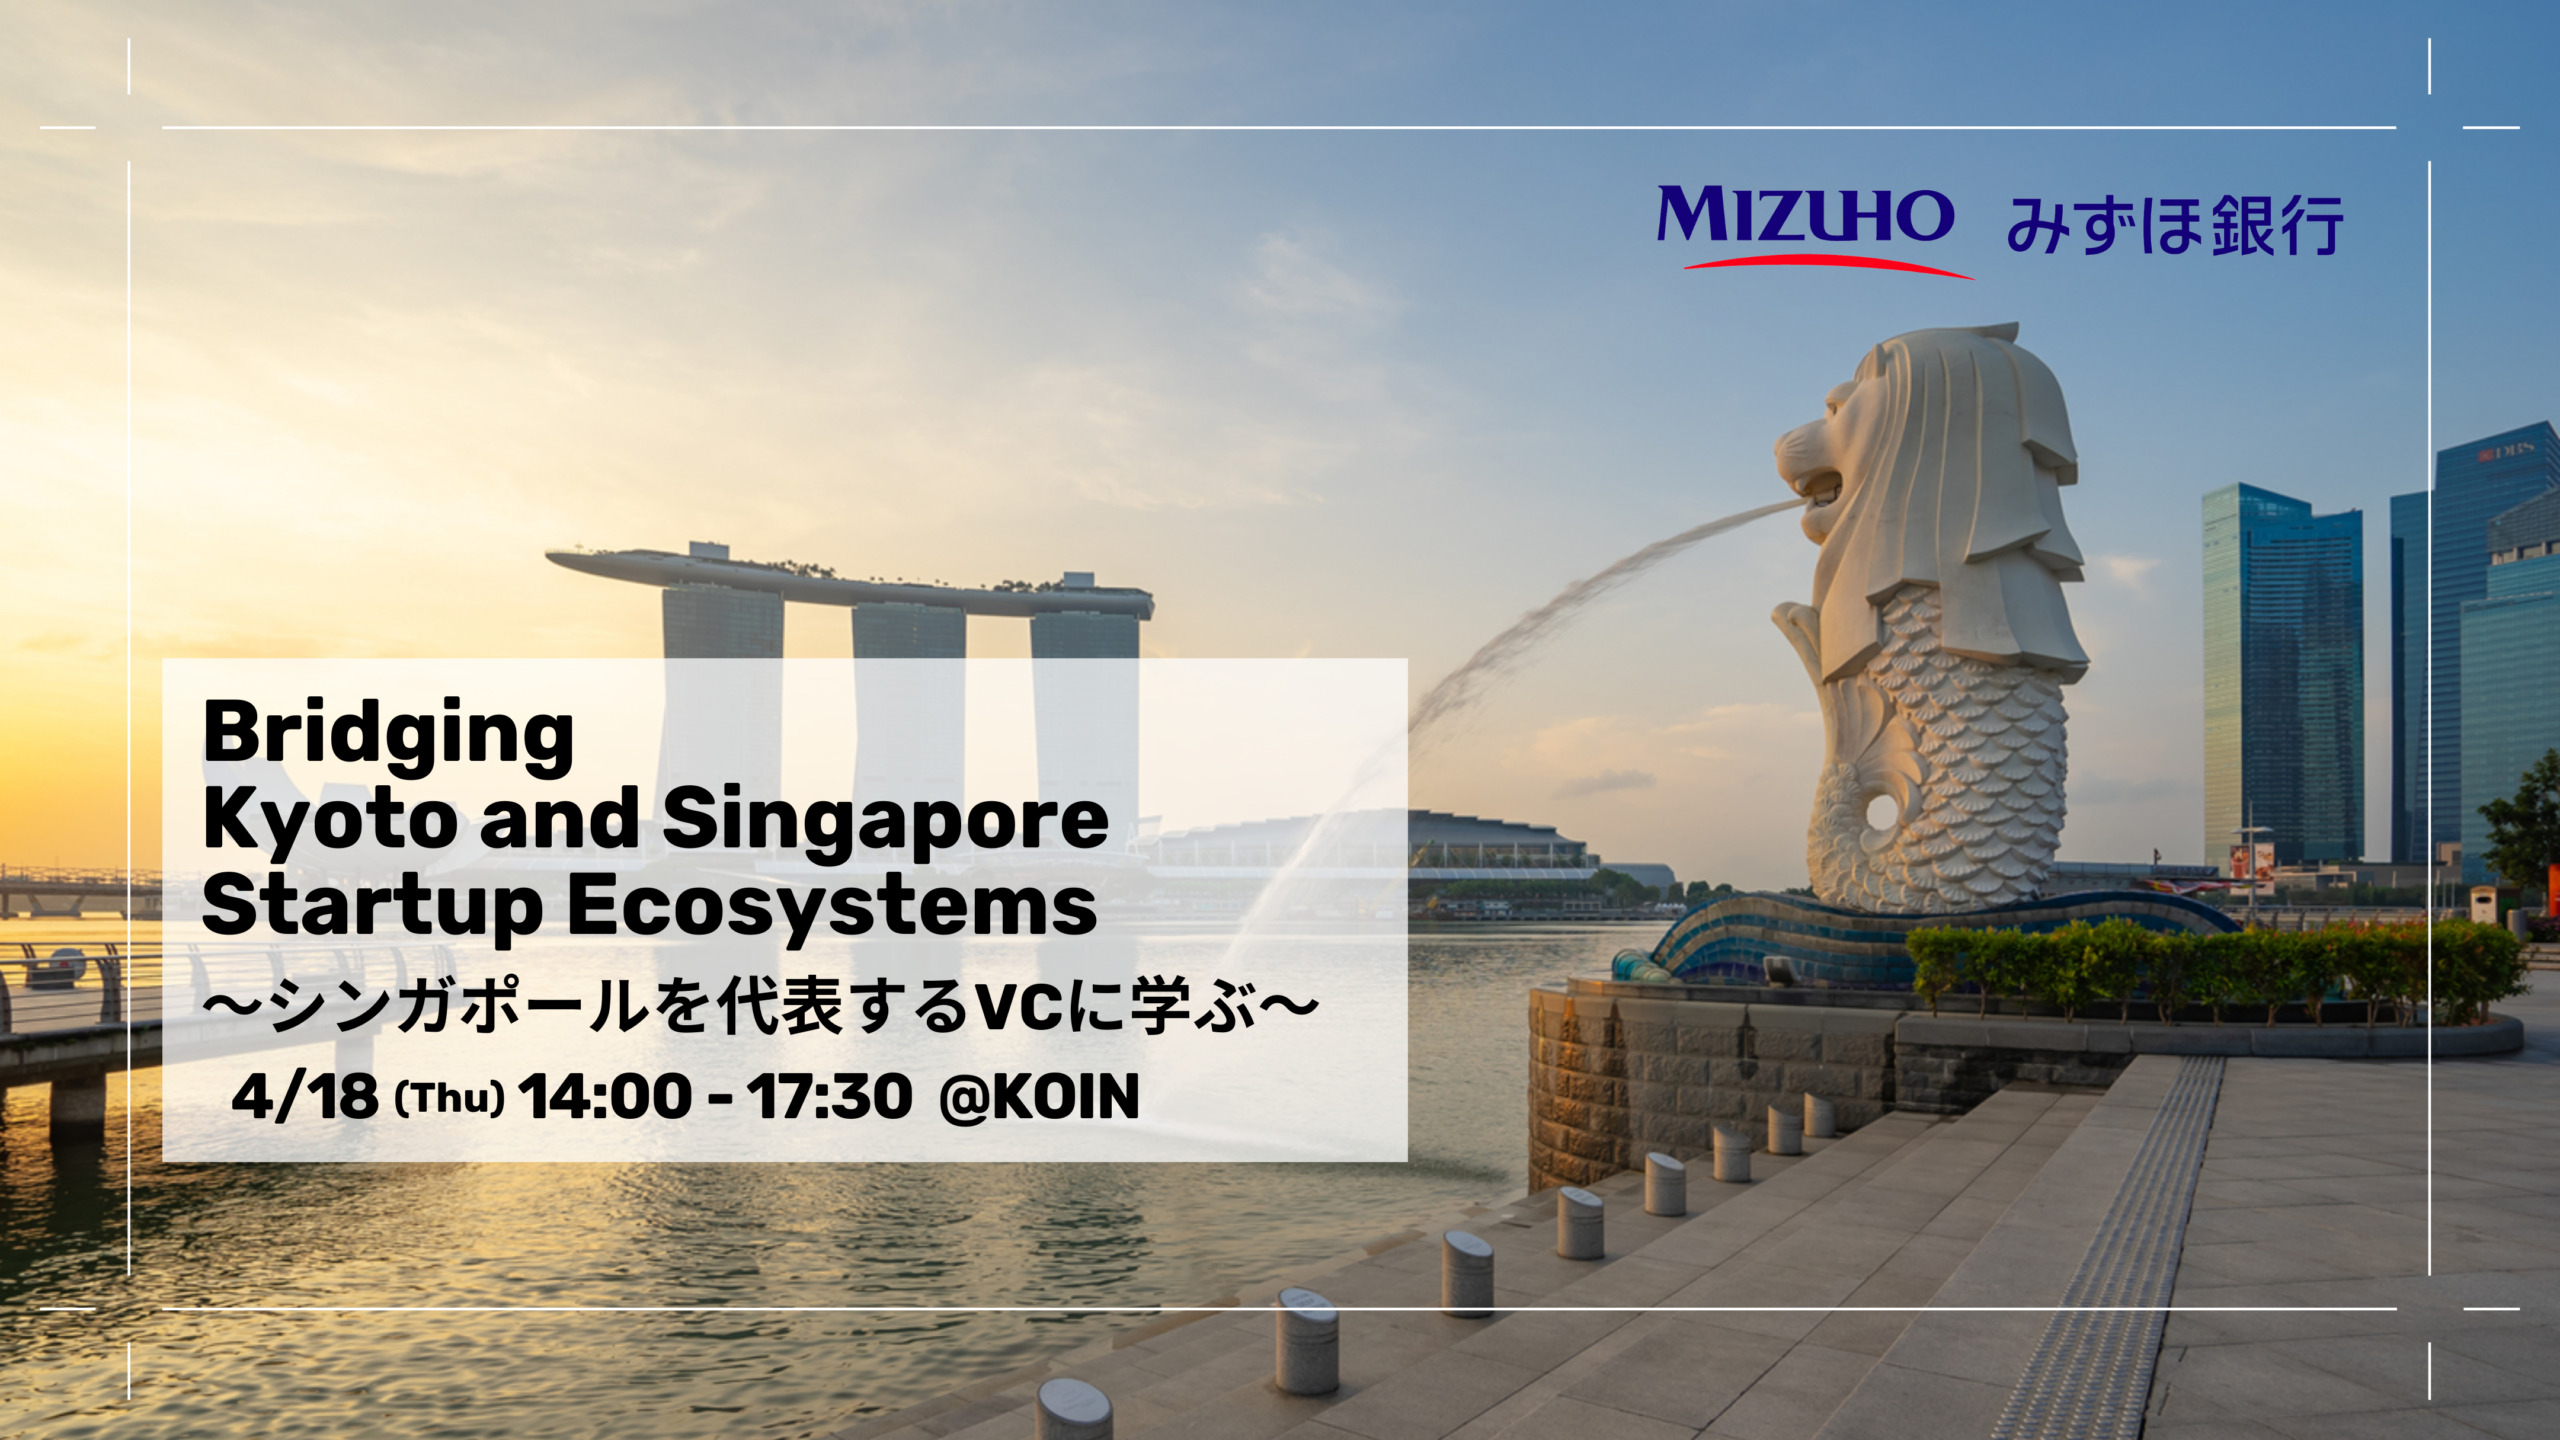 Bridging Kyoto and Singapore Startup Ecosystems